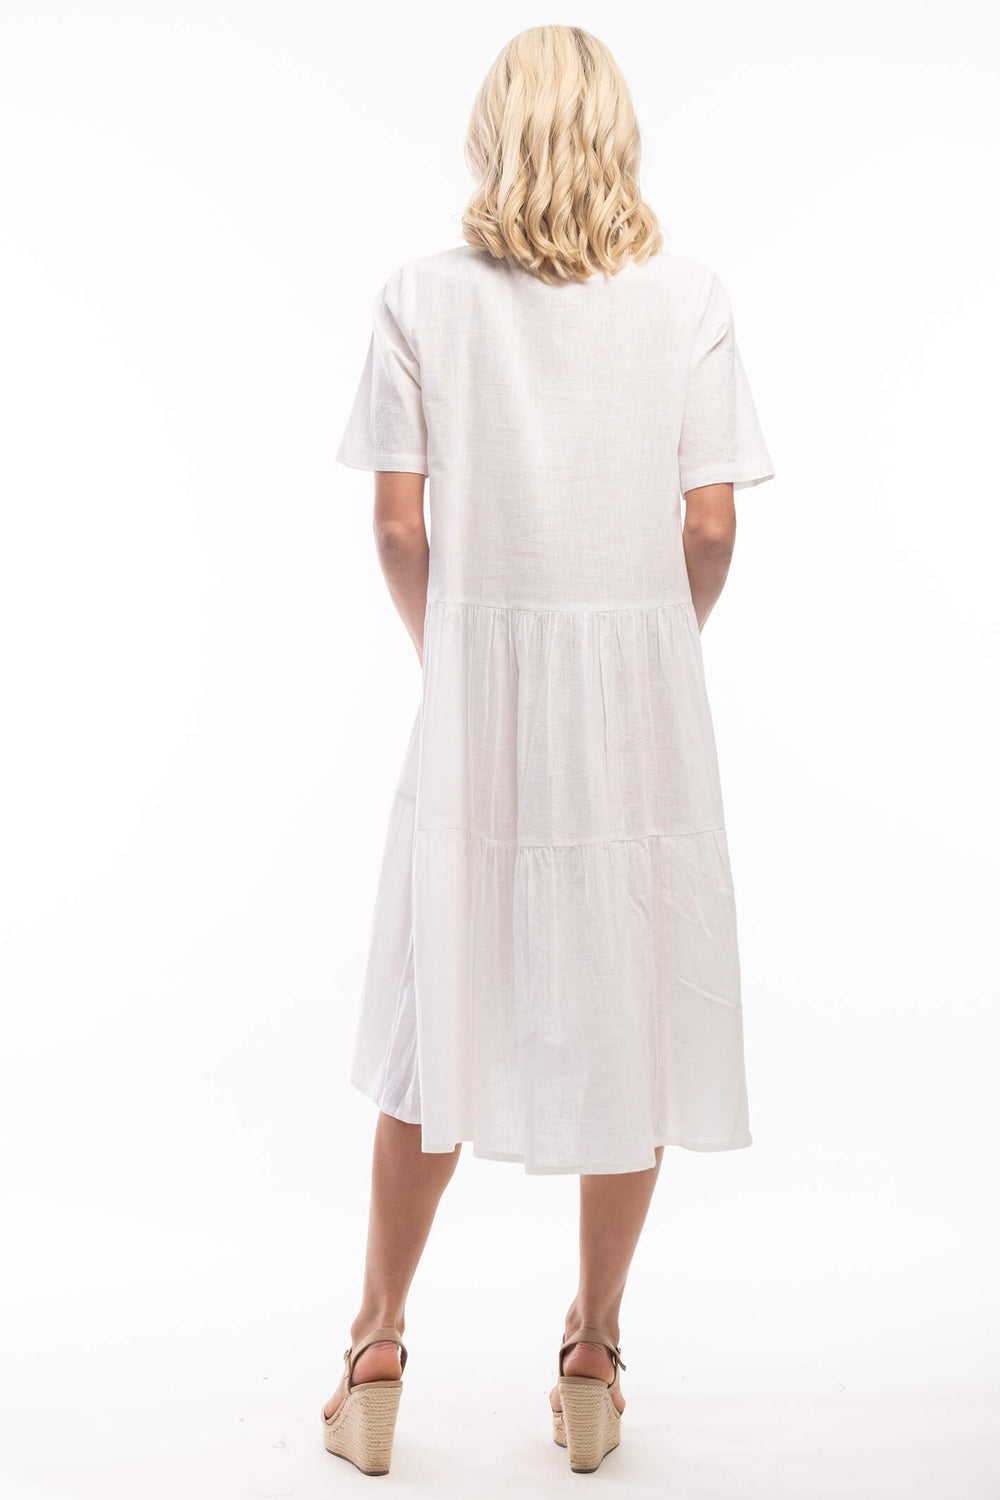 Orientique 5104 White Tiered Midi Dress - Experience Boutique